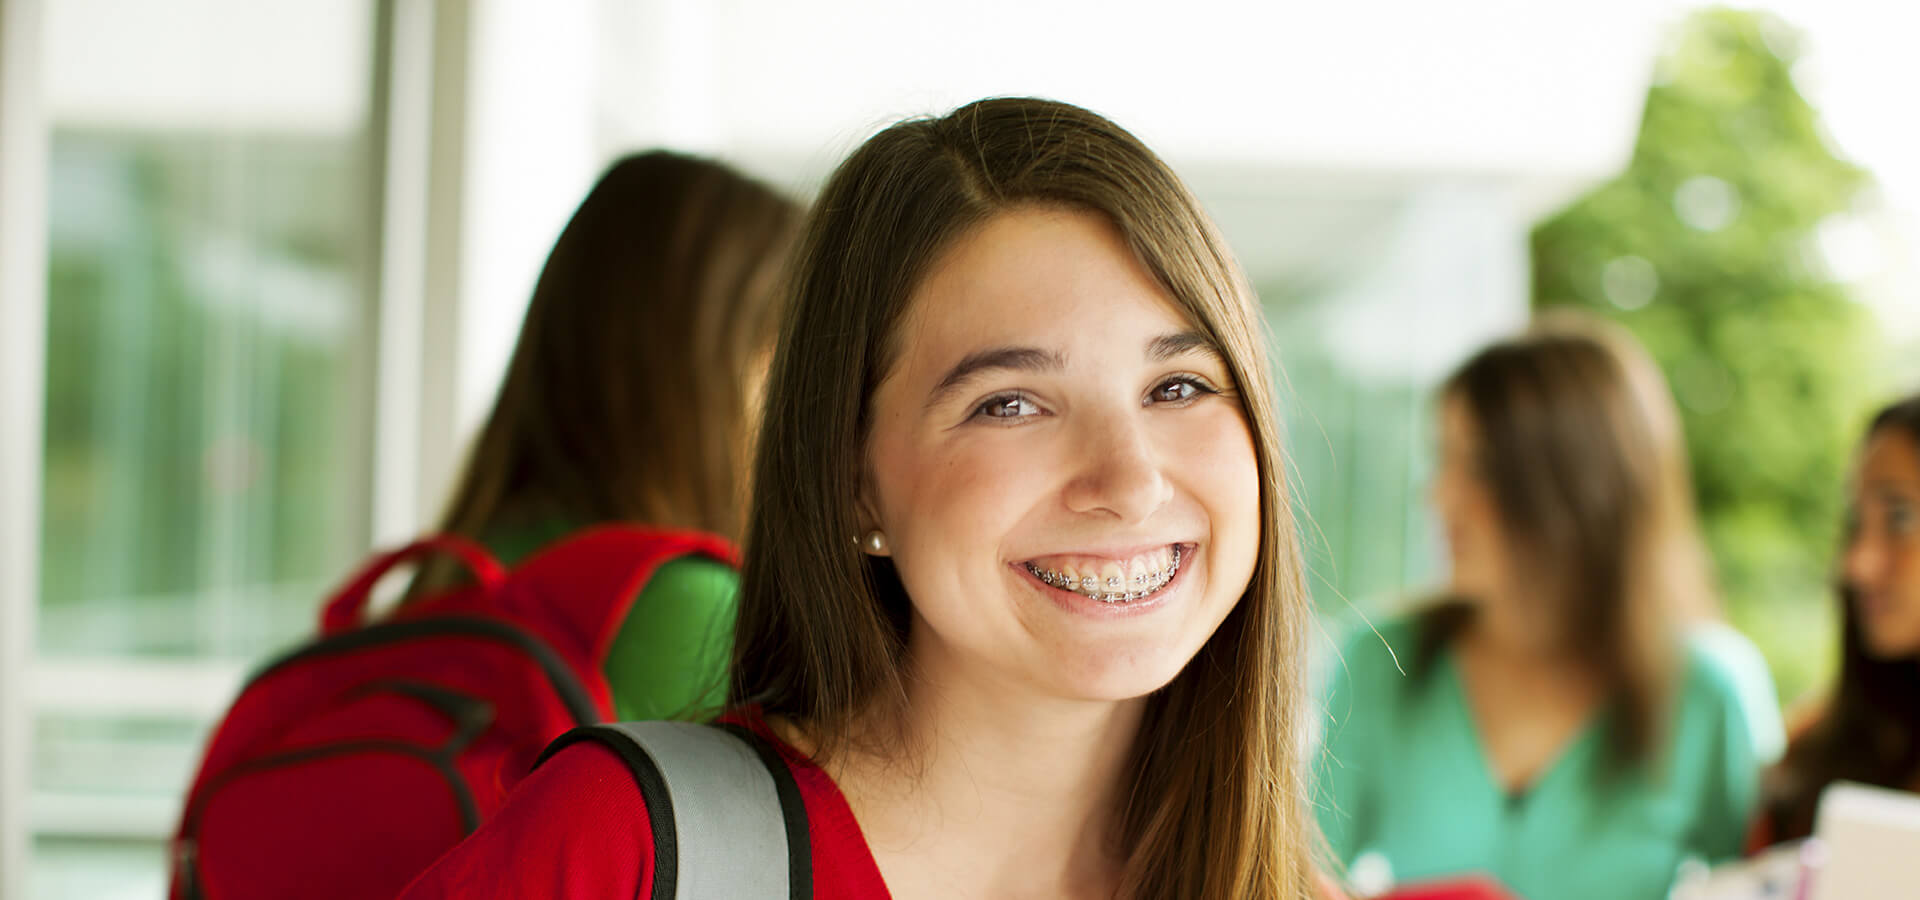 Smiling Brunette Teenage Girl in Braces